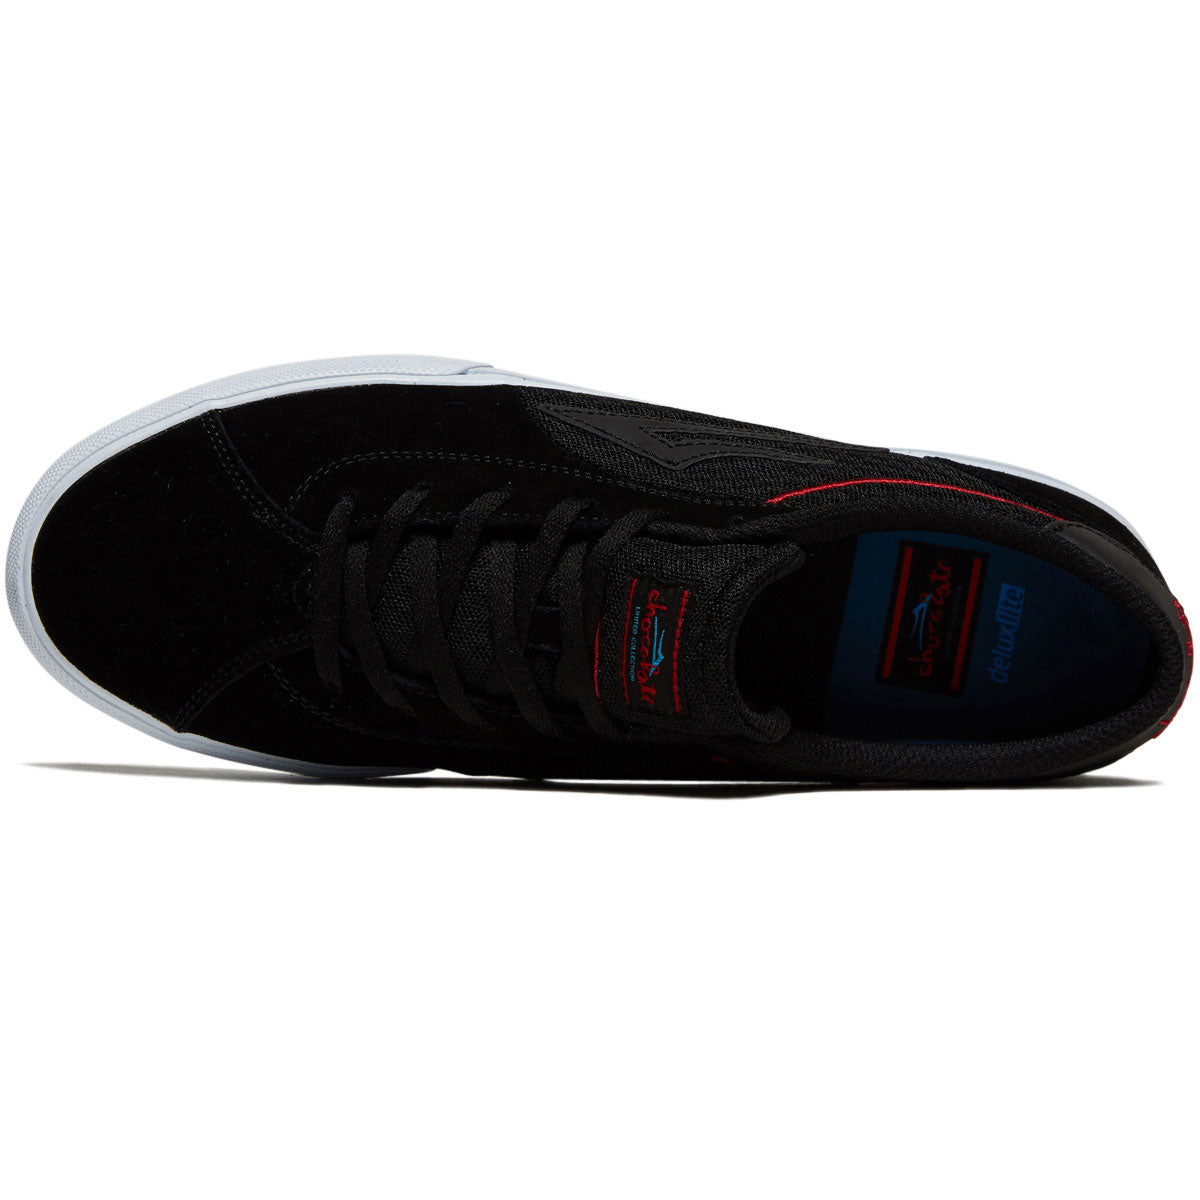 Lakai x Chocolate Flaco II Shoes - Black/Red Suede image 3